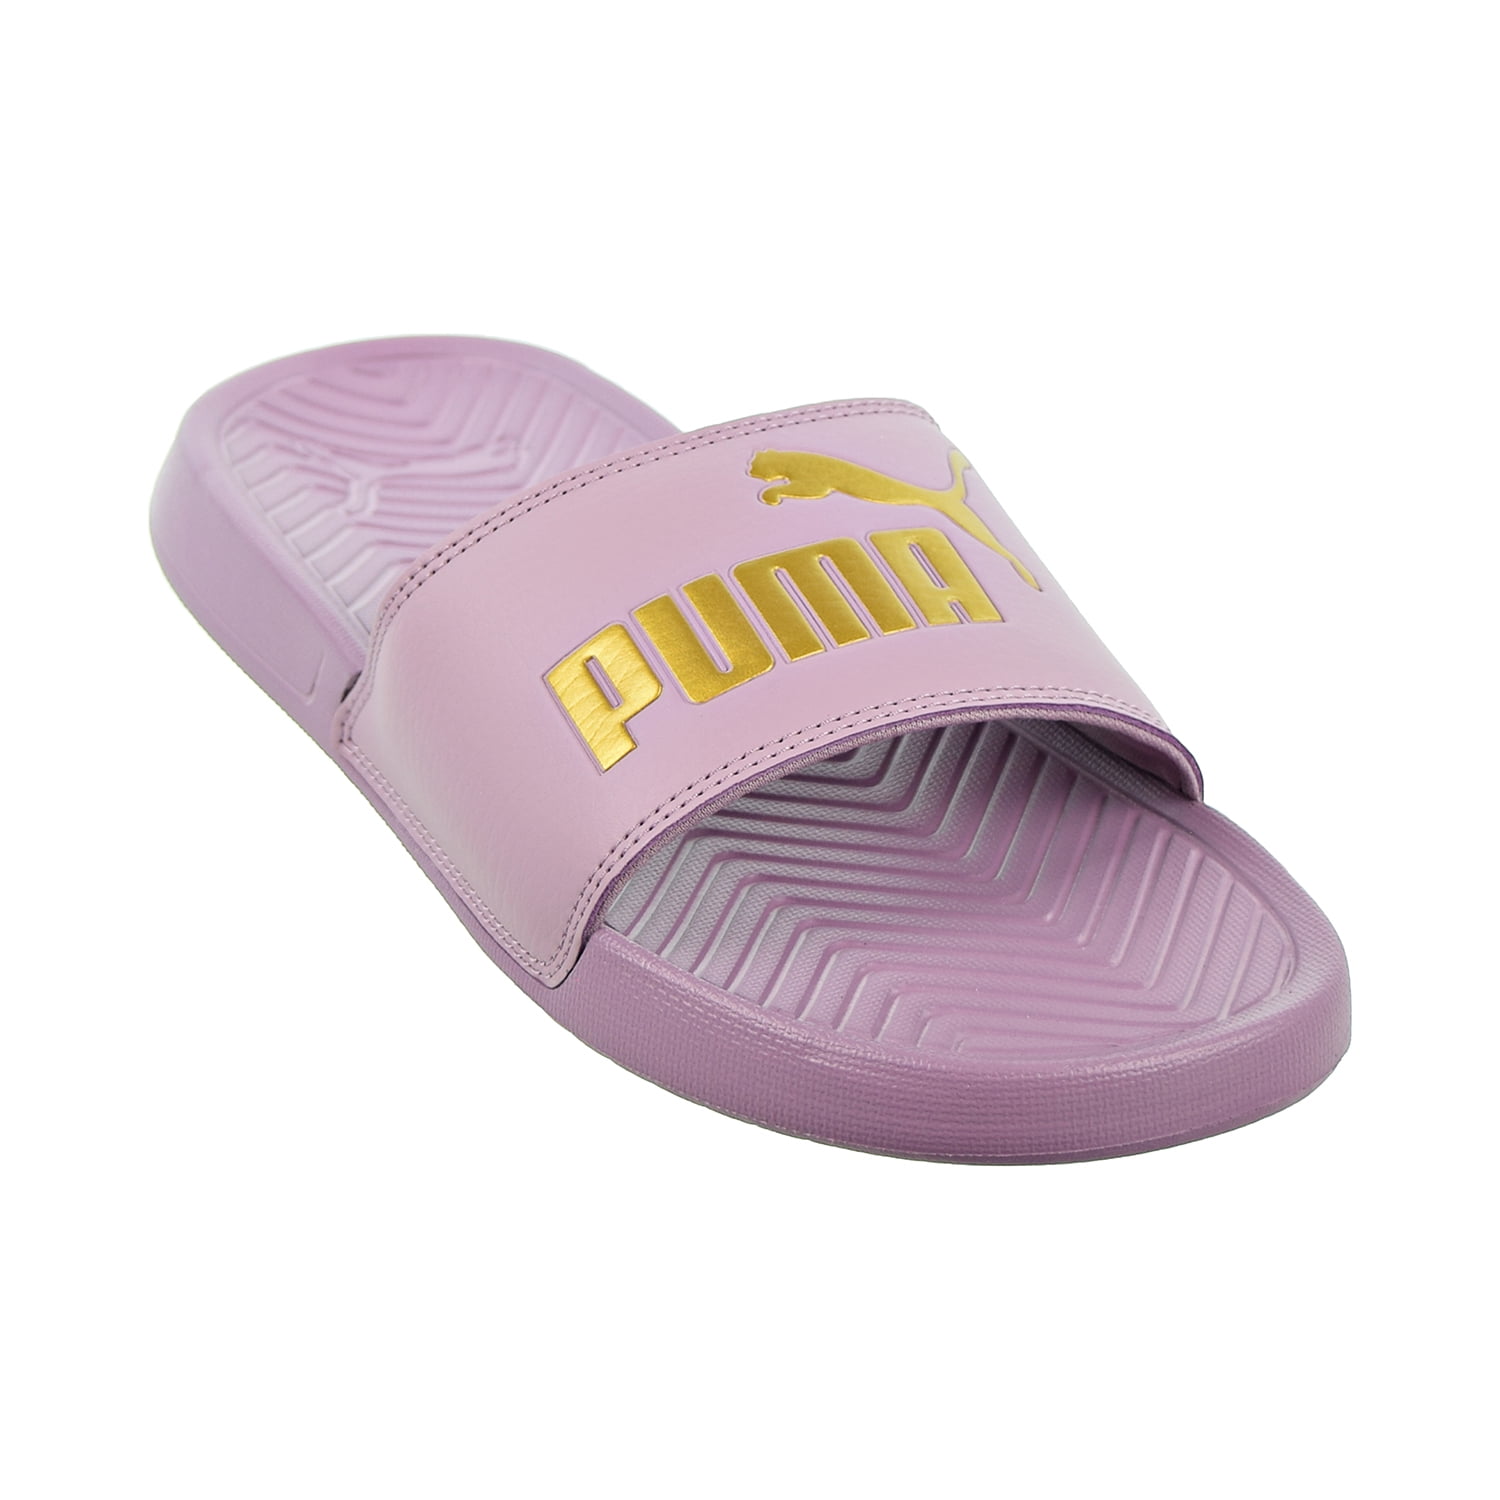 puma mens sandals price list